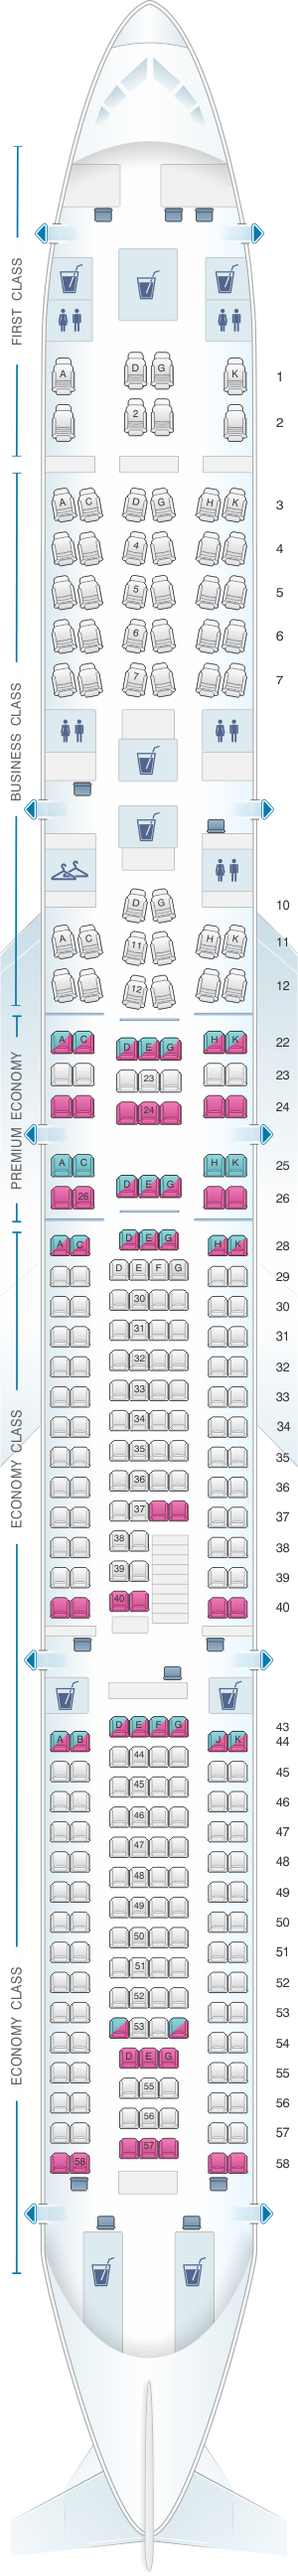 Atlantic Airbus A340 600 Seating Chart